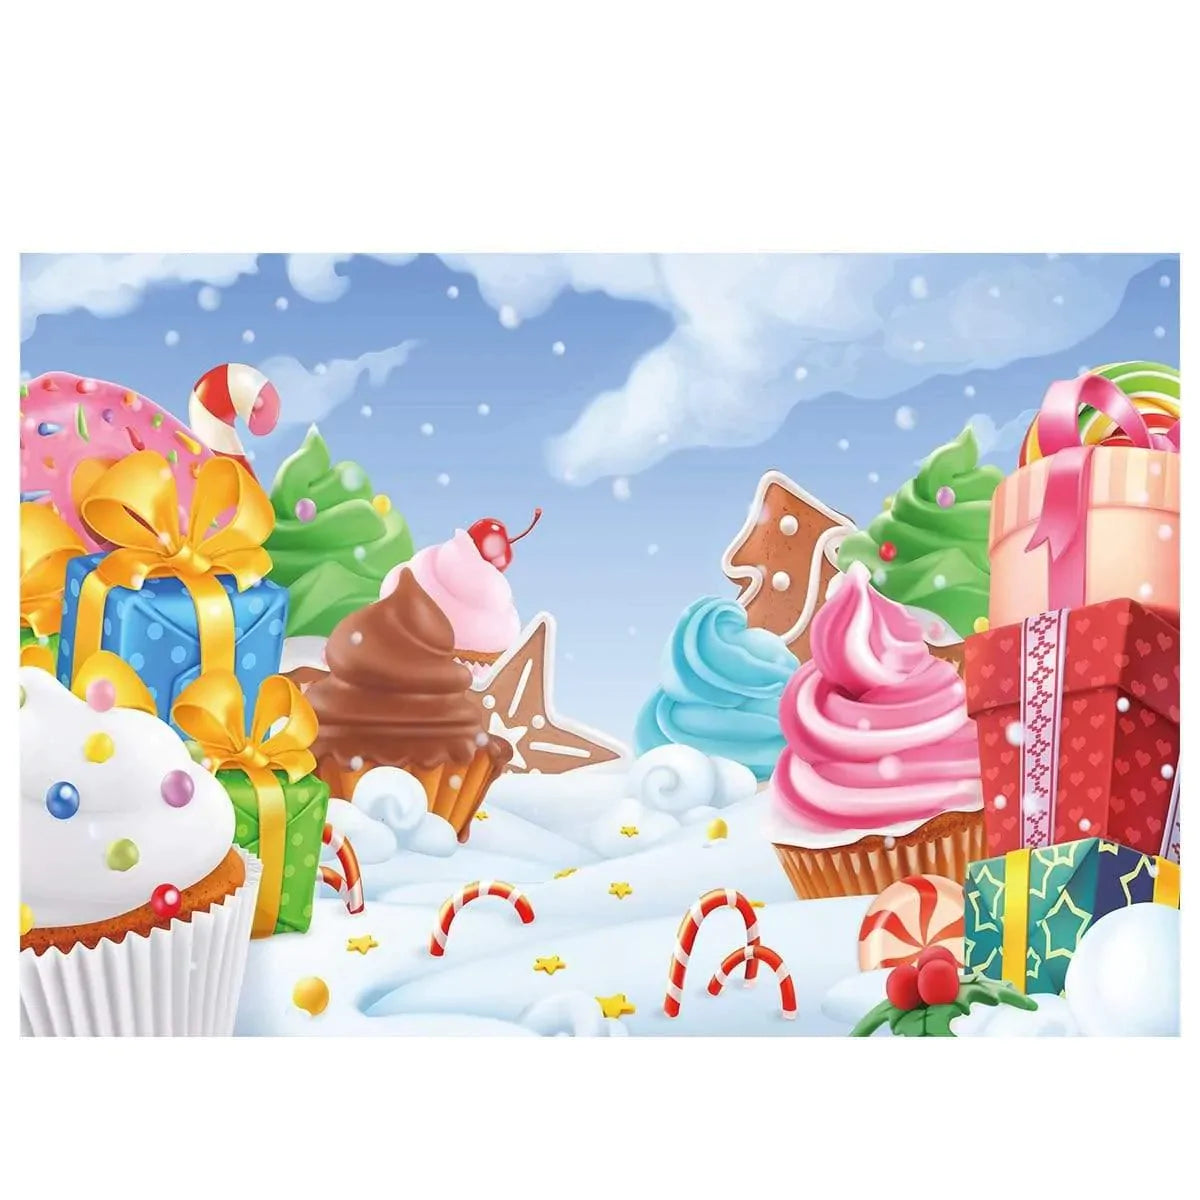 Allenjoy Backdrop Candy Bar Winter Christmas Gift Background Photocall Studio Photobooth - Allenjoystudio